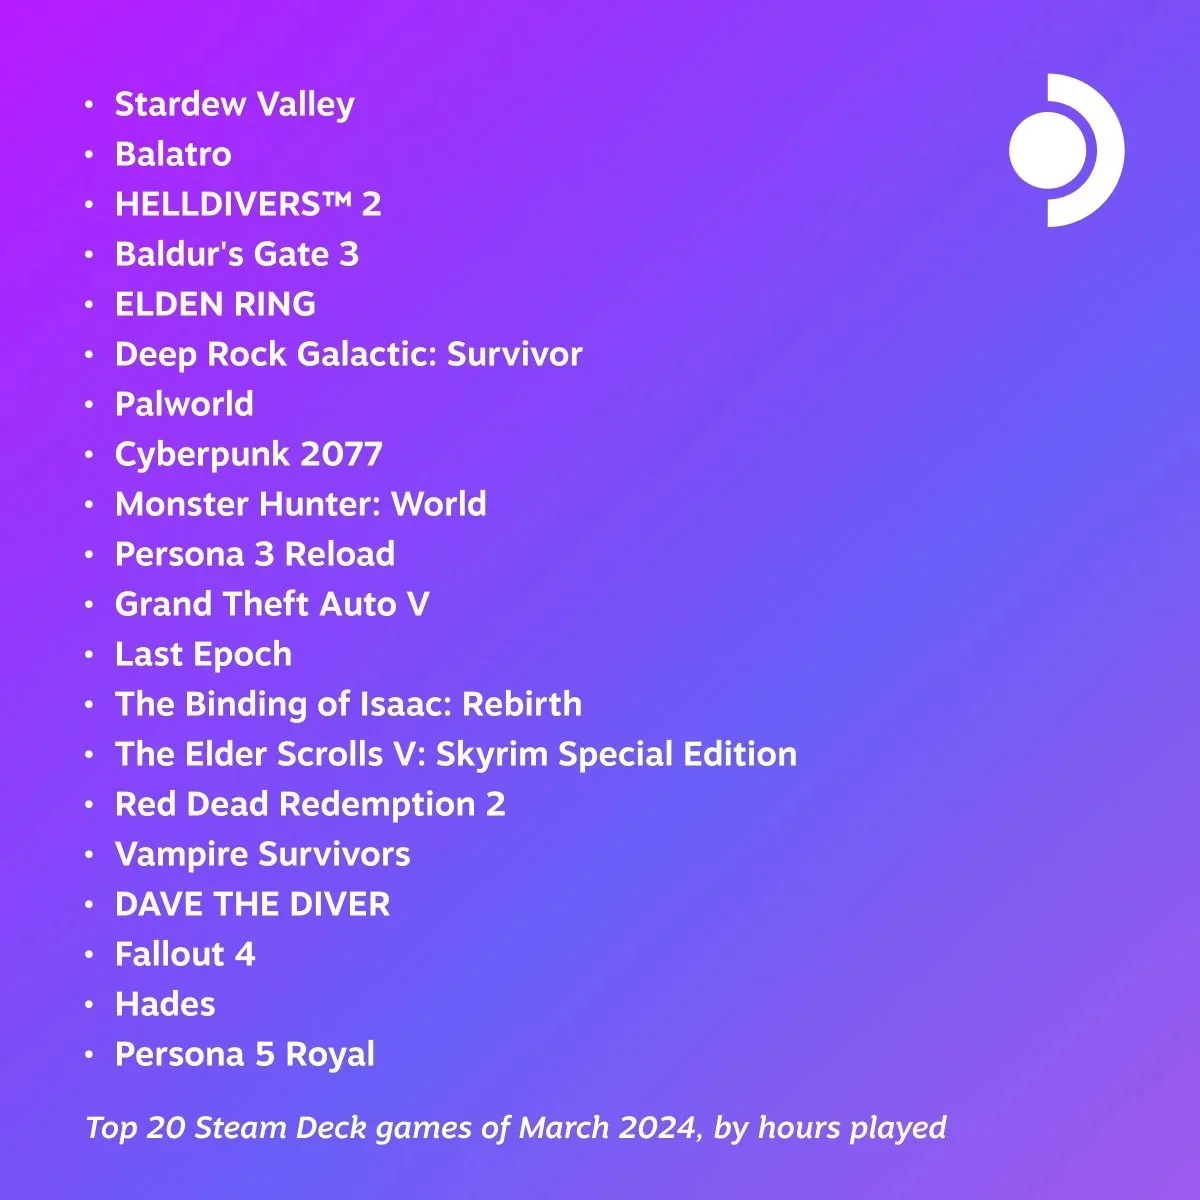 Stardew Valley и Balatro возглавили чарт популярных игр на Steam Deck в марте - фото 1